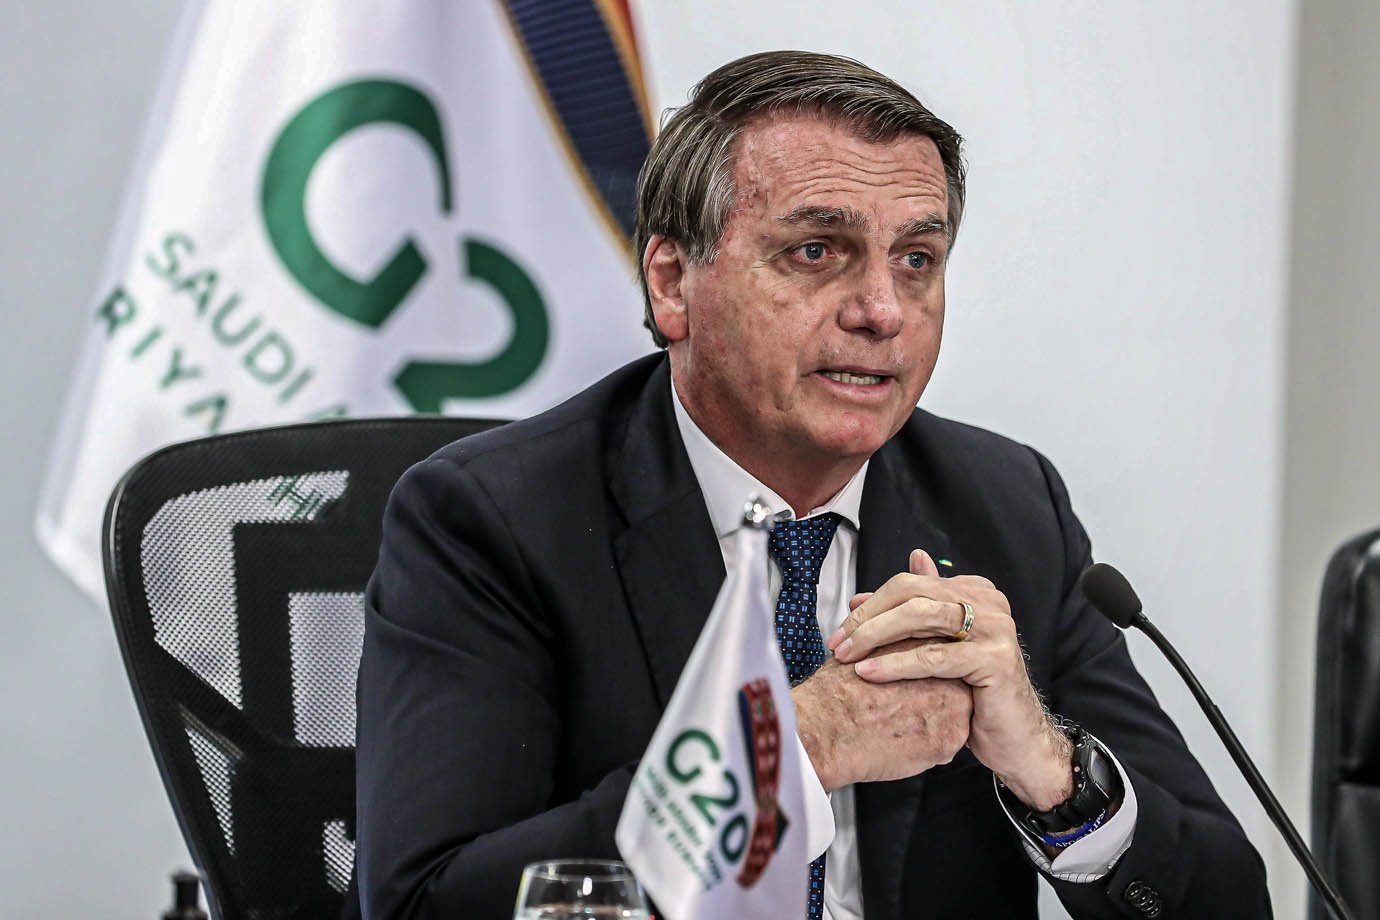 22/11/2020 Cúpula do G20 (videoconferência) (Brasília - DF, 22/11/2020) Palavras do Presidente da República, Jair Bolsonaro. Foto: Marcos Corrêa/PR